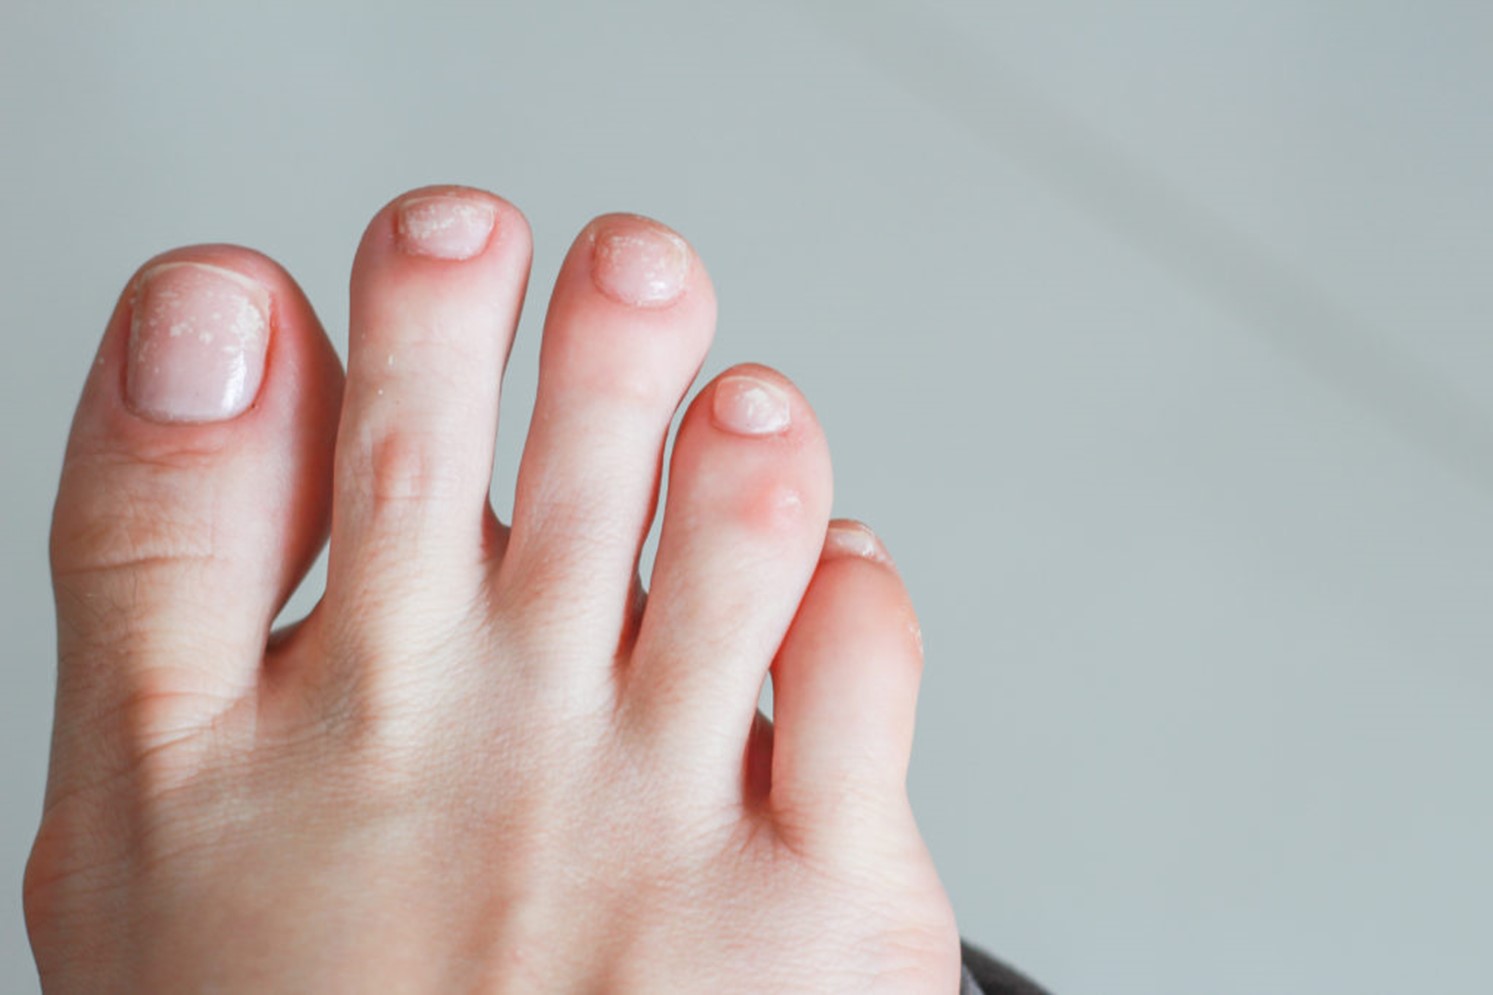 Photo of a Person's Feet with White Nail Polish · Free Stock Photo